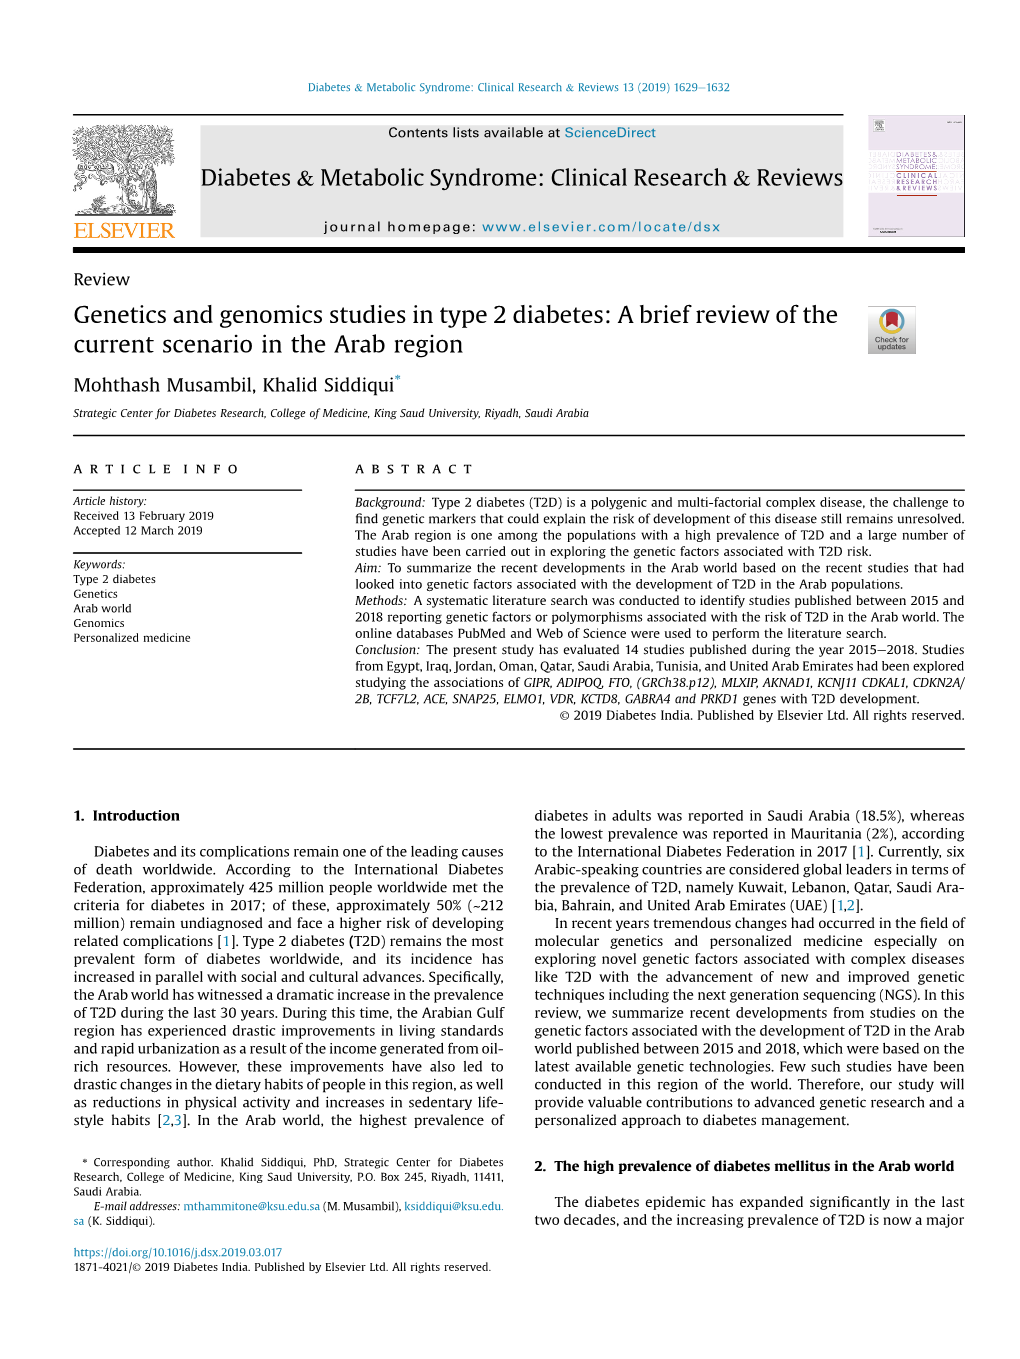 Genetics and Genomics Studies in Type 2 Diabetes: a Brief Review of the Current Scenario in the Arab Region